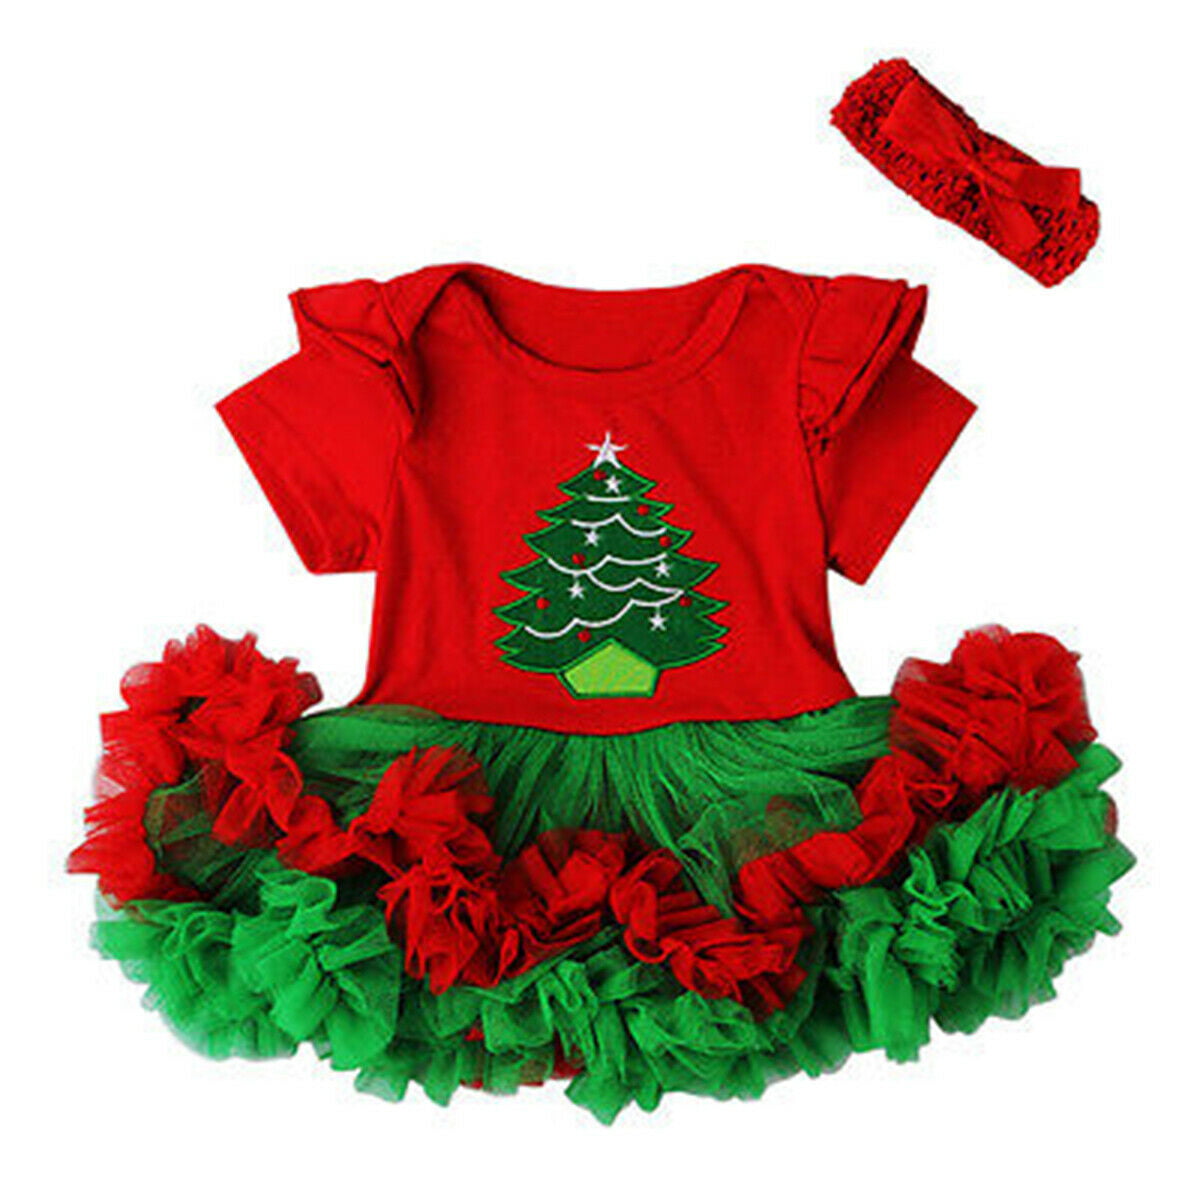 Unique Life Newborn Infant Baby Girls Christmas Tree Letter Dress Tutu Hairband Set Baby Clothes Gift Christmas